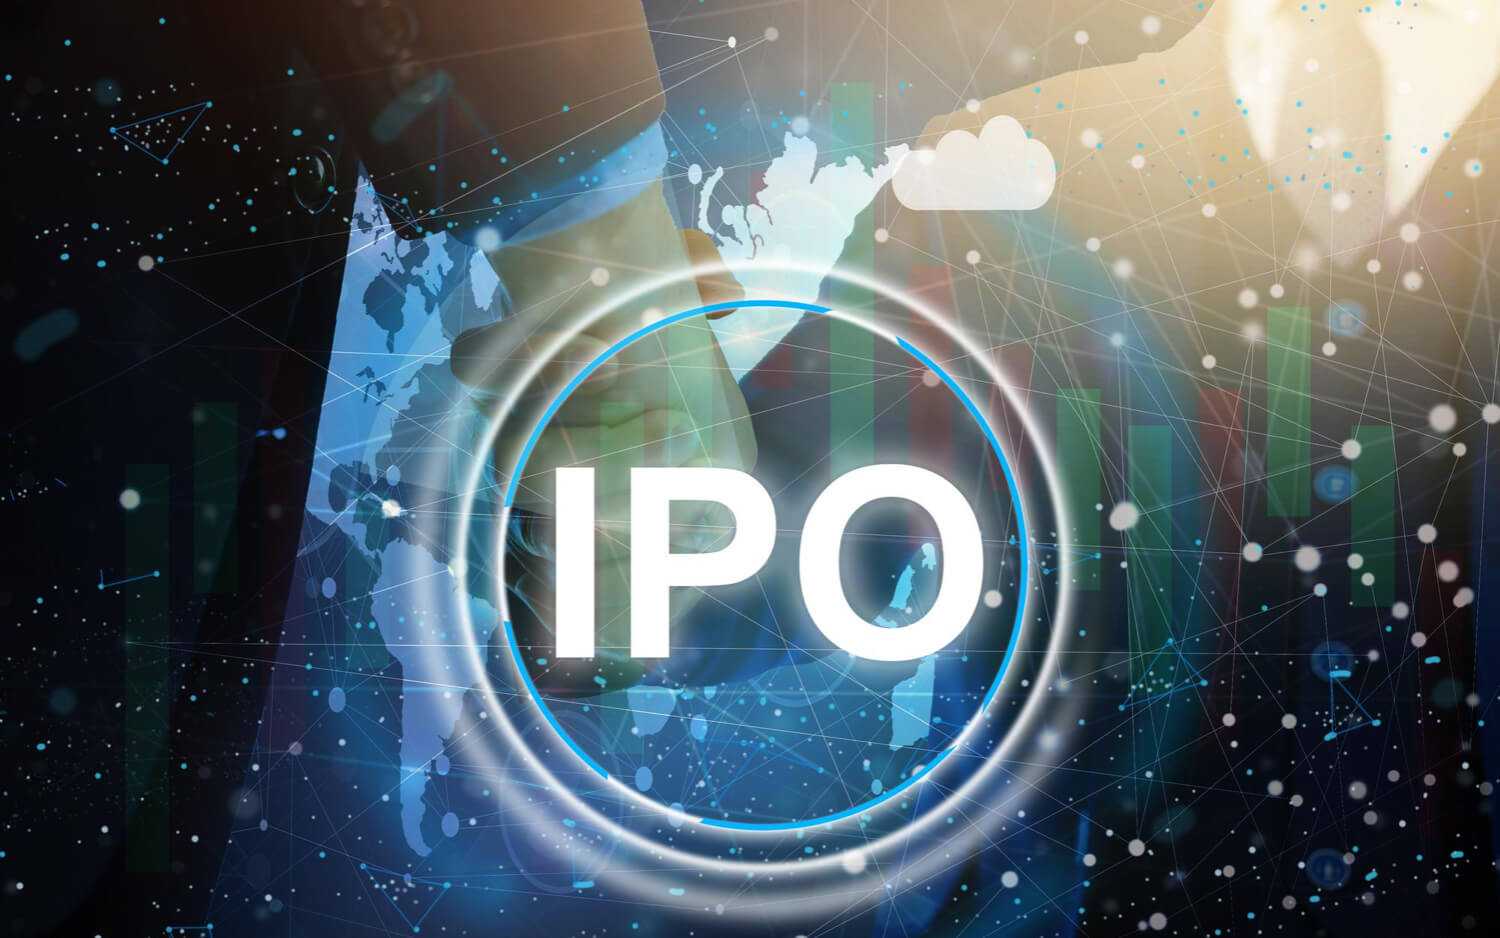 IPO roll coaster image